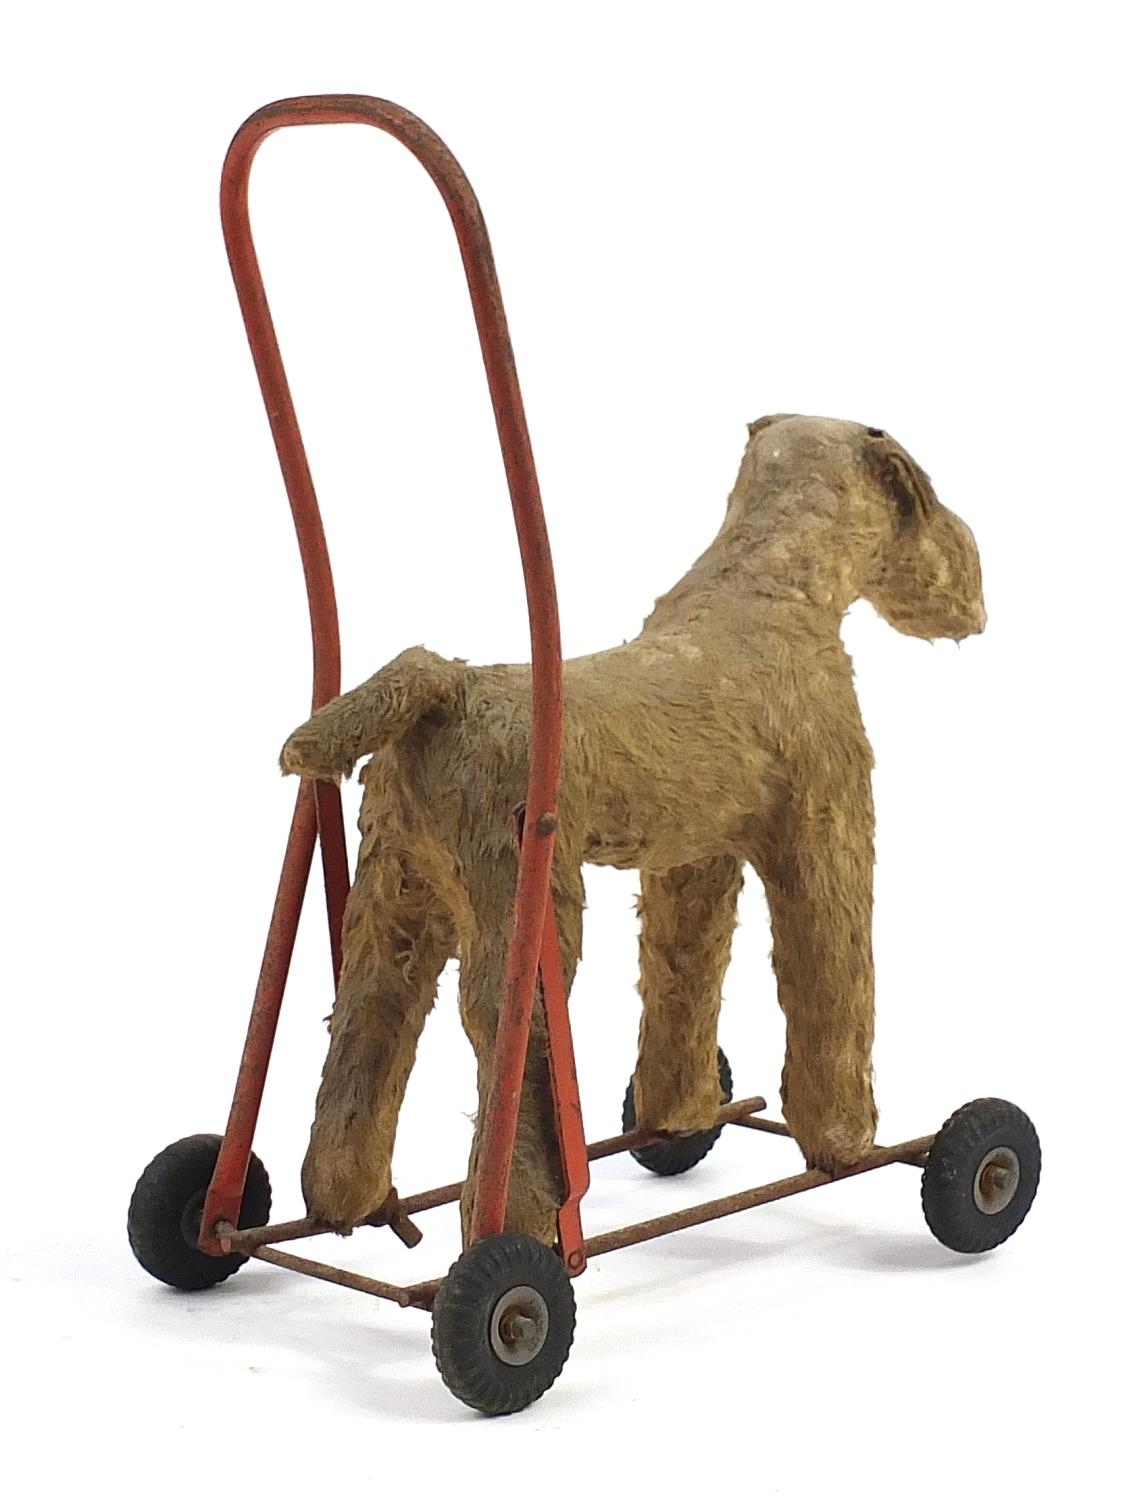 Vintage push-along child's toy dog by International Model Aircraft Ltd, 52cm high - Image 2 of 5